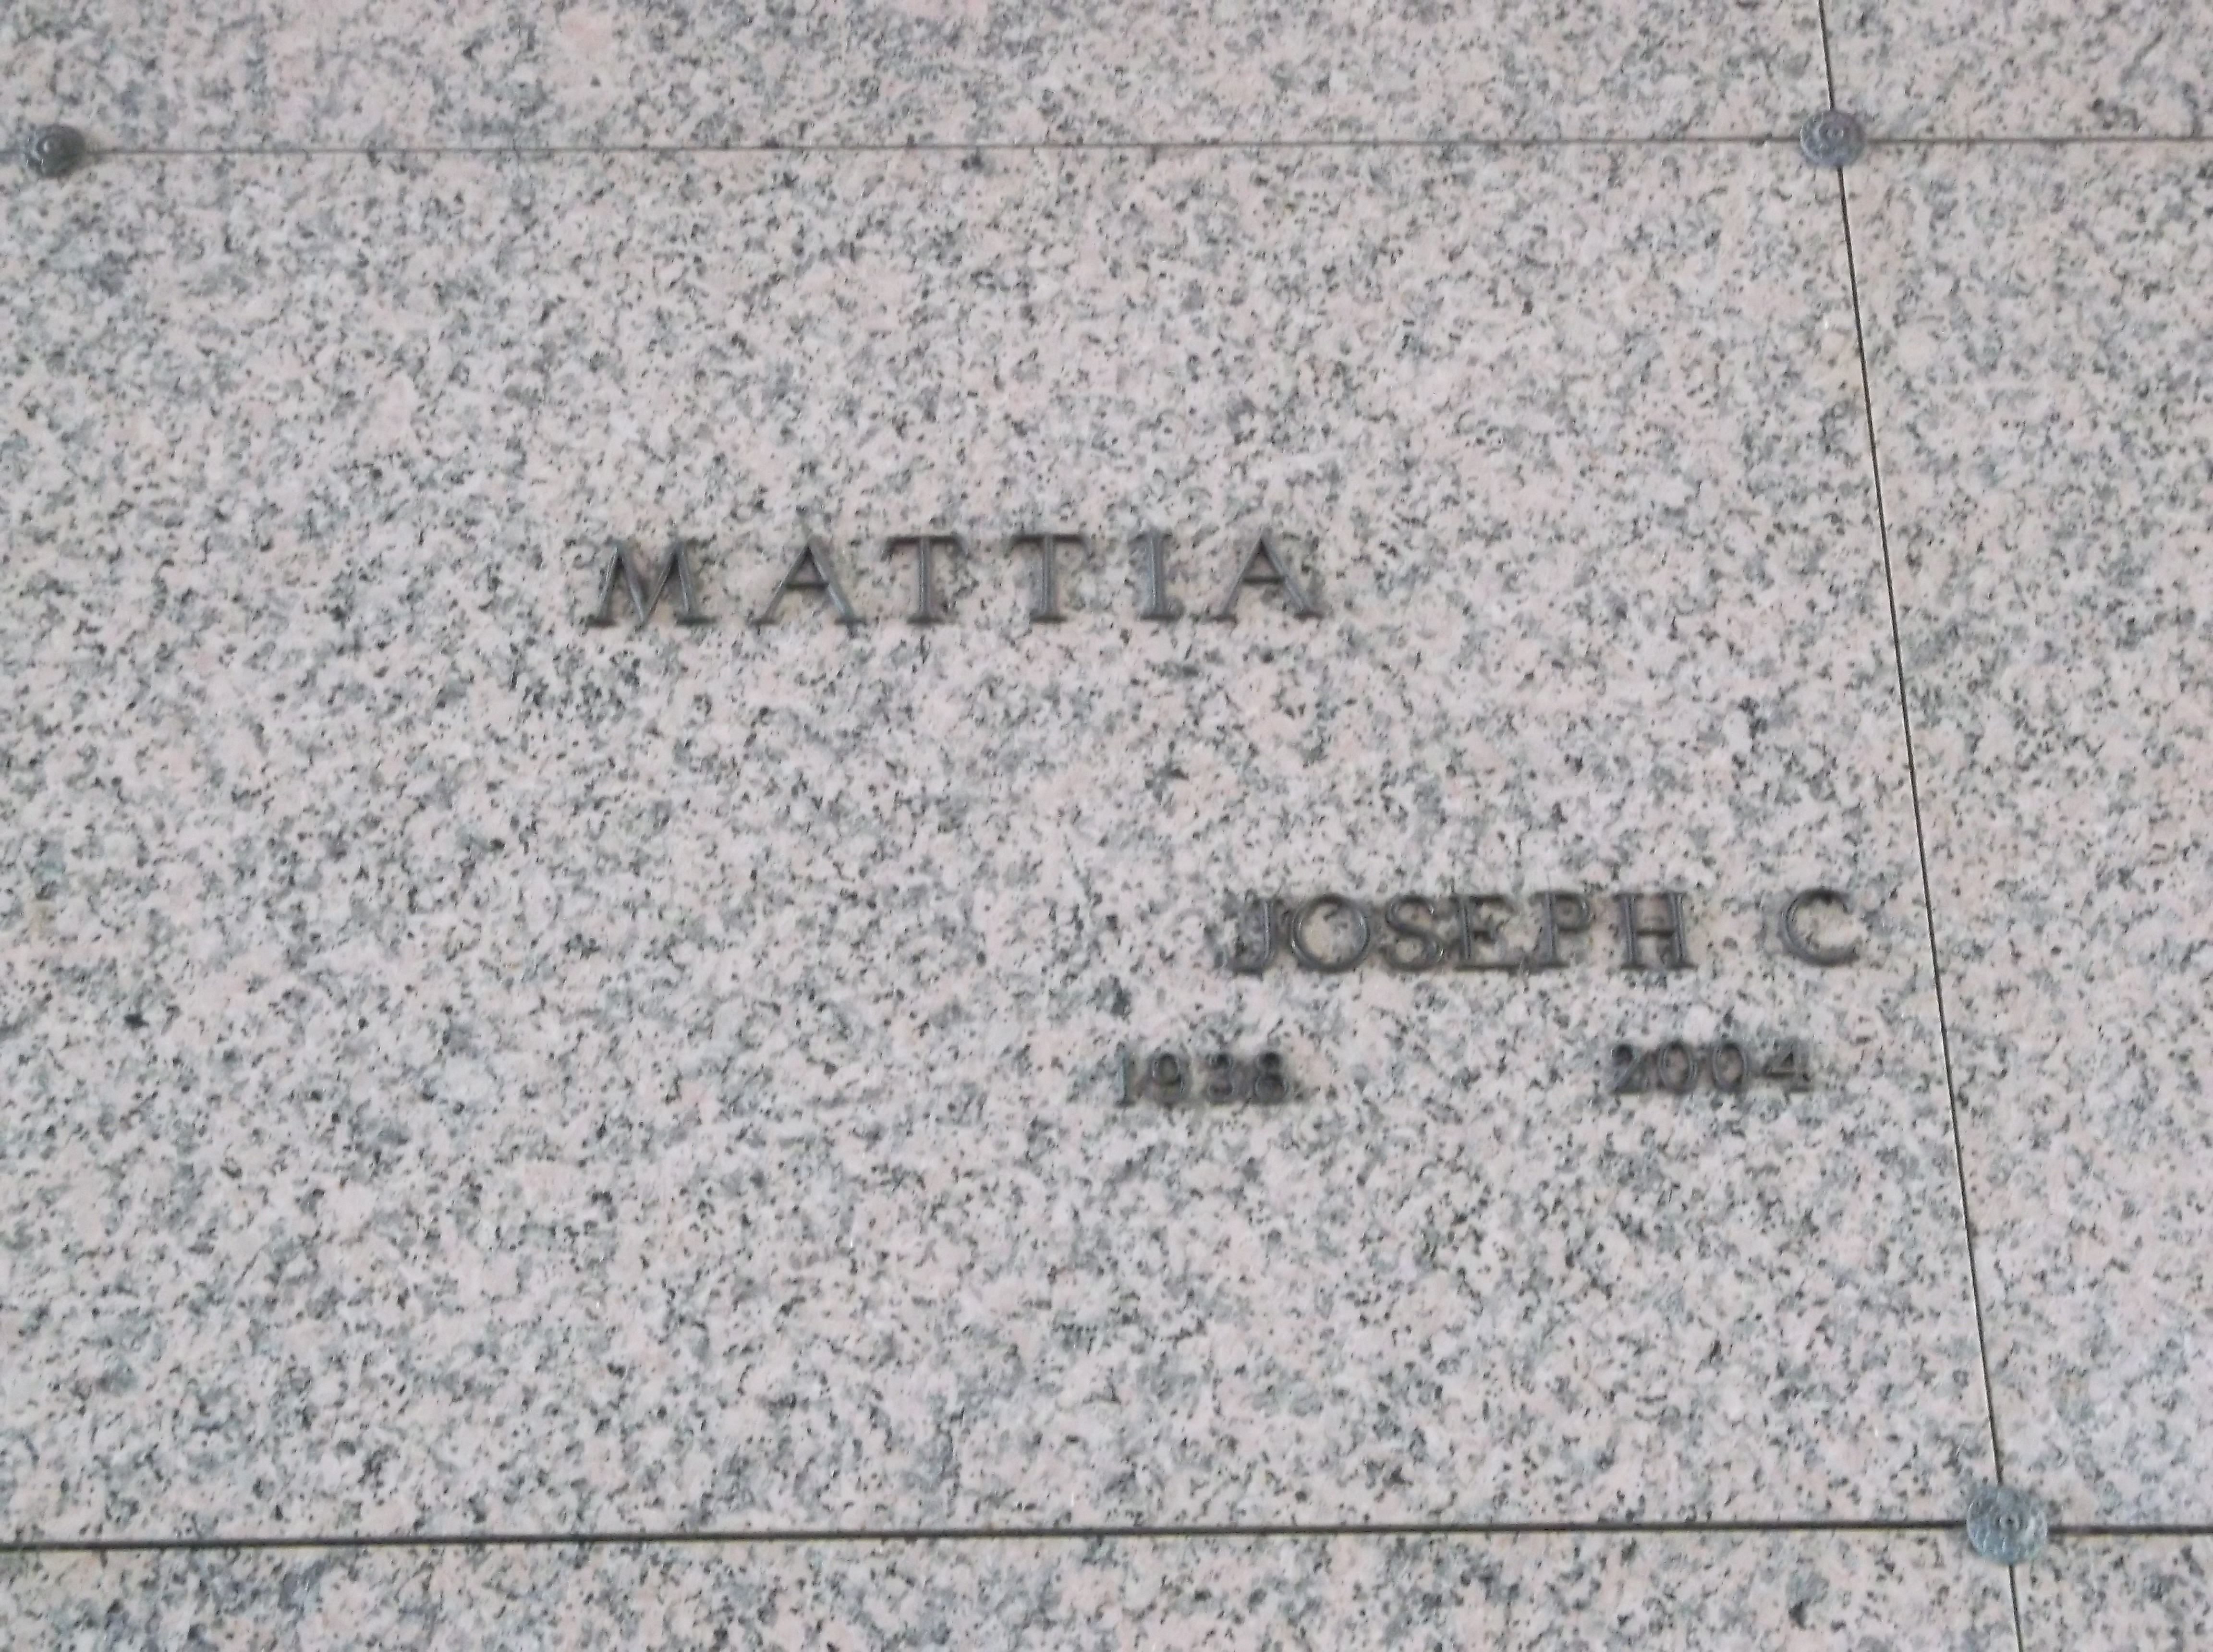 Joseph C Mattia